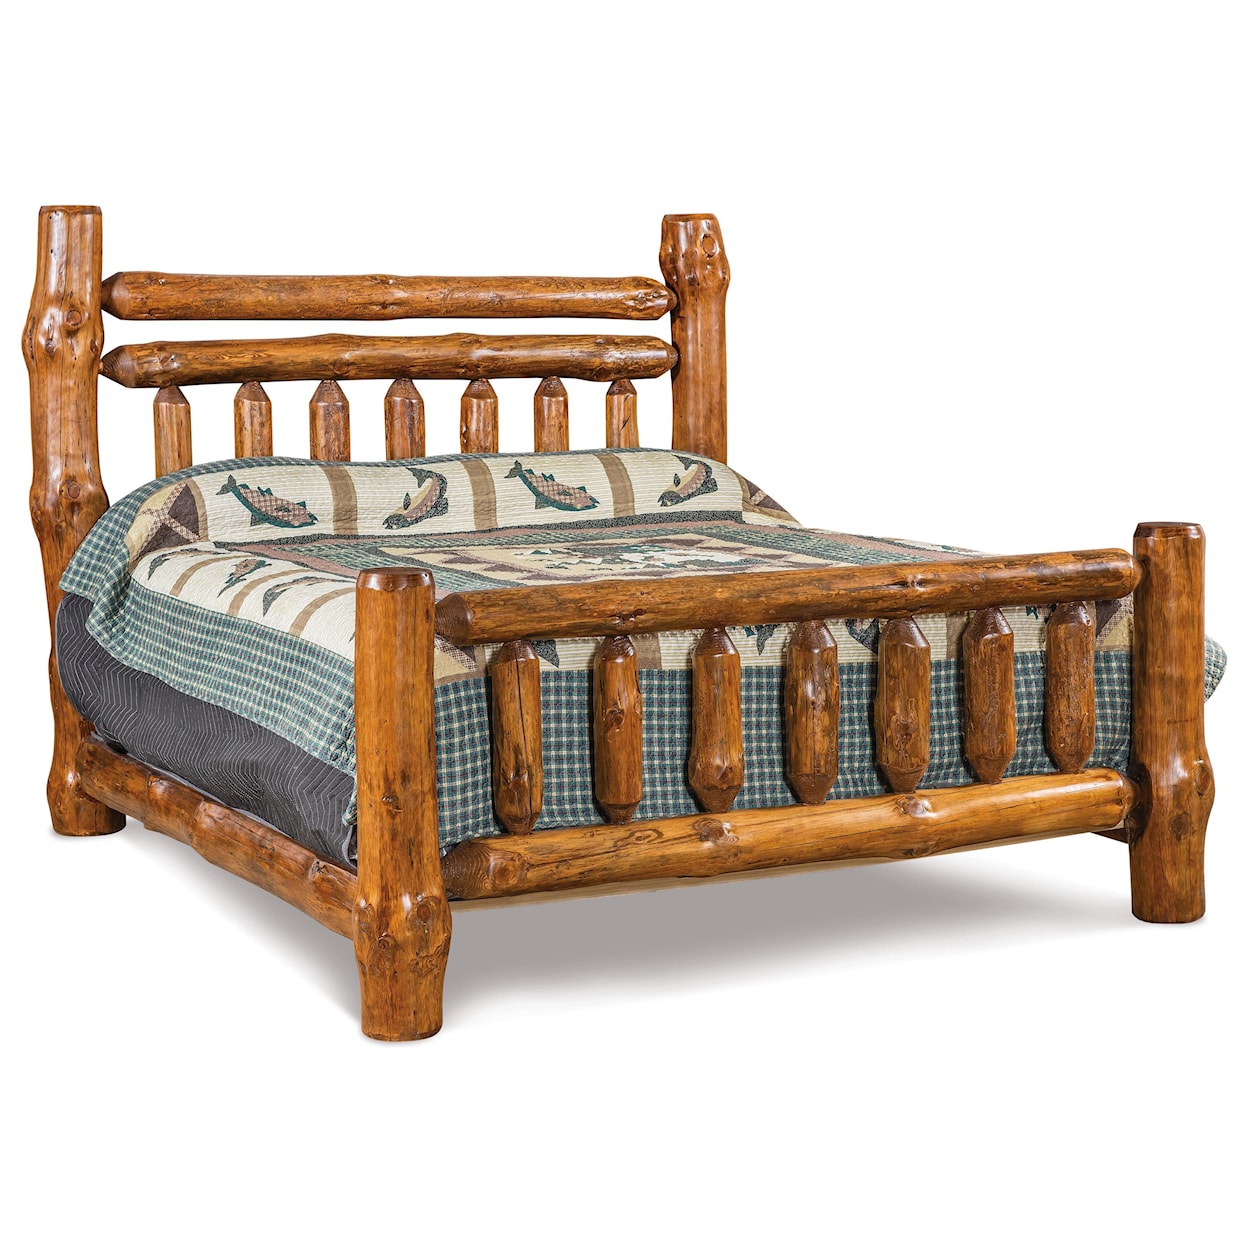 Fireside Log Furniture Log Bedroom Queen Double Rail Bed